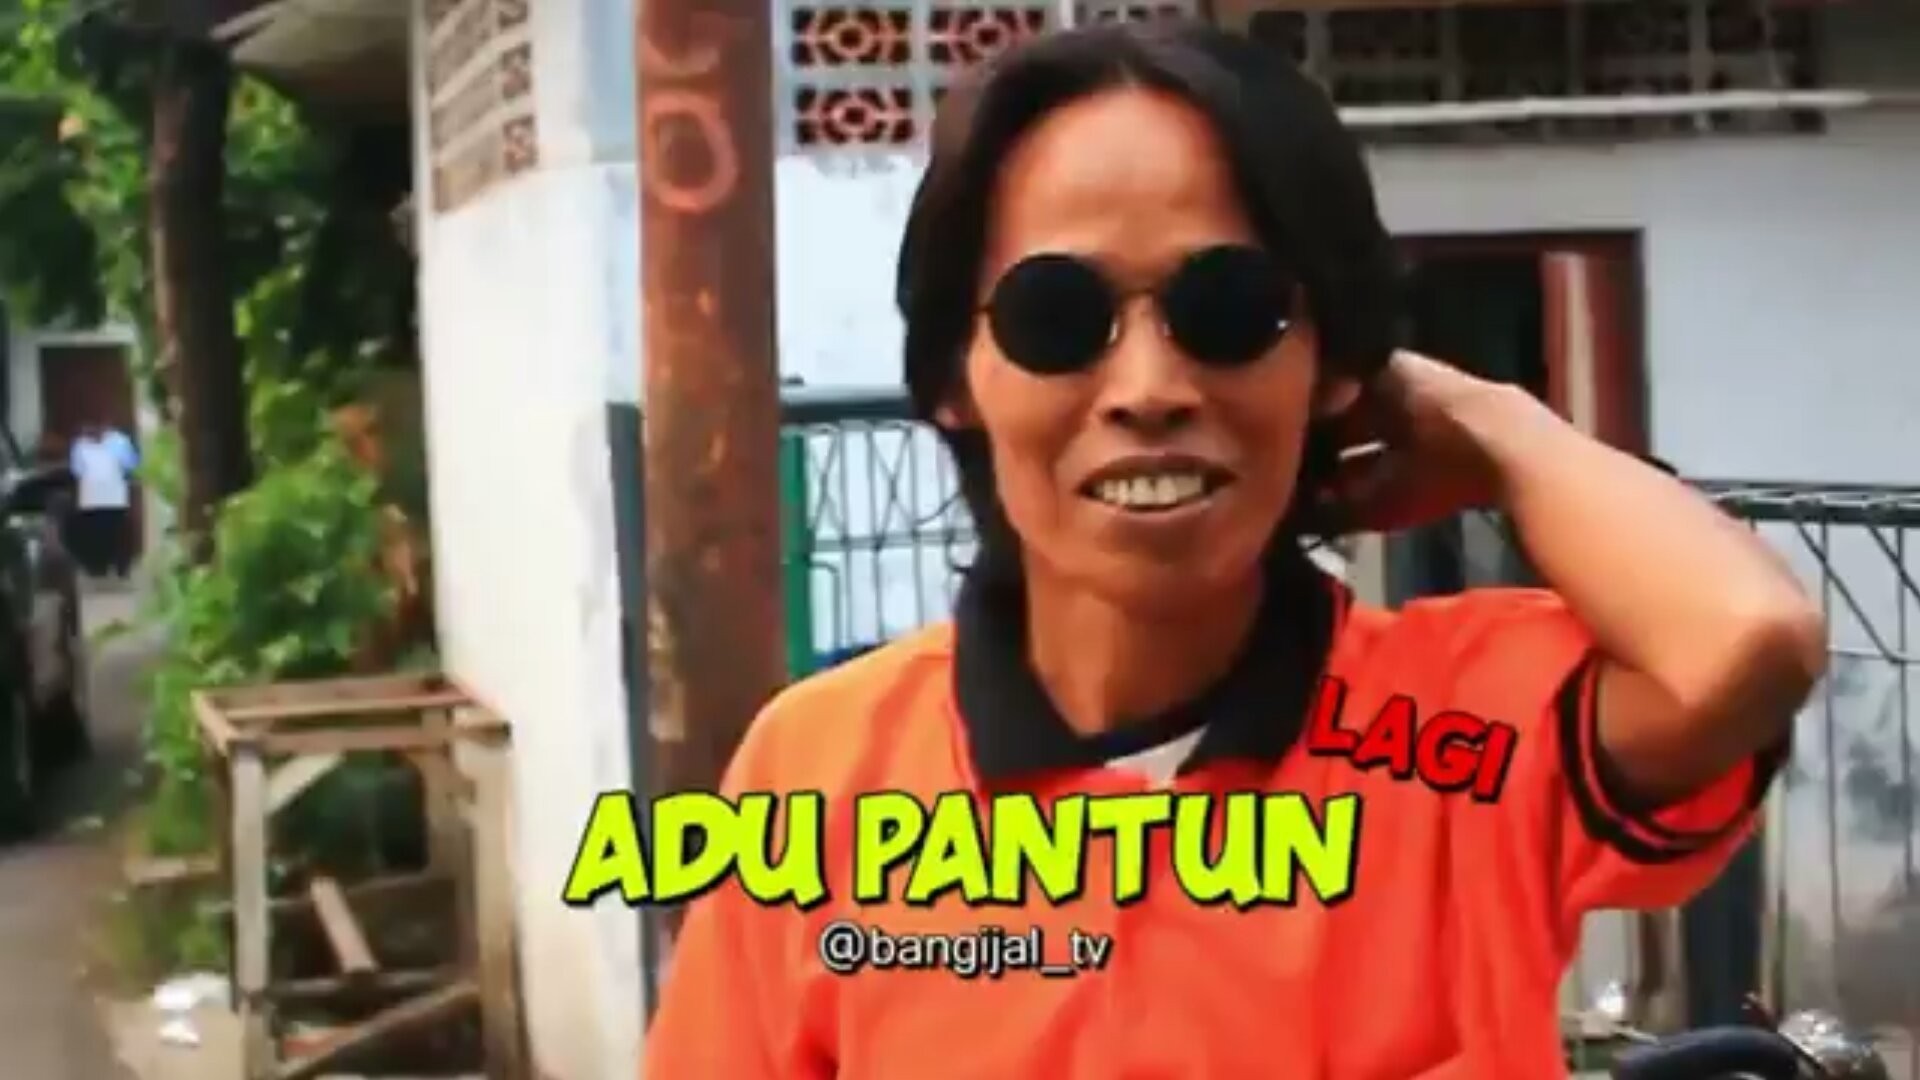 Video Lucu Joker Adu Pantun Bangijal Tv Terbaru 2018 Vidiocom